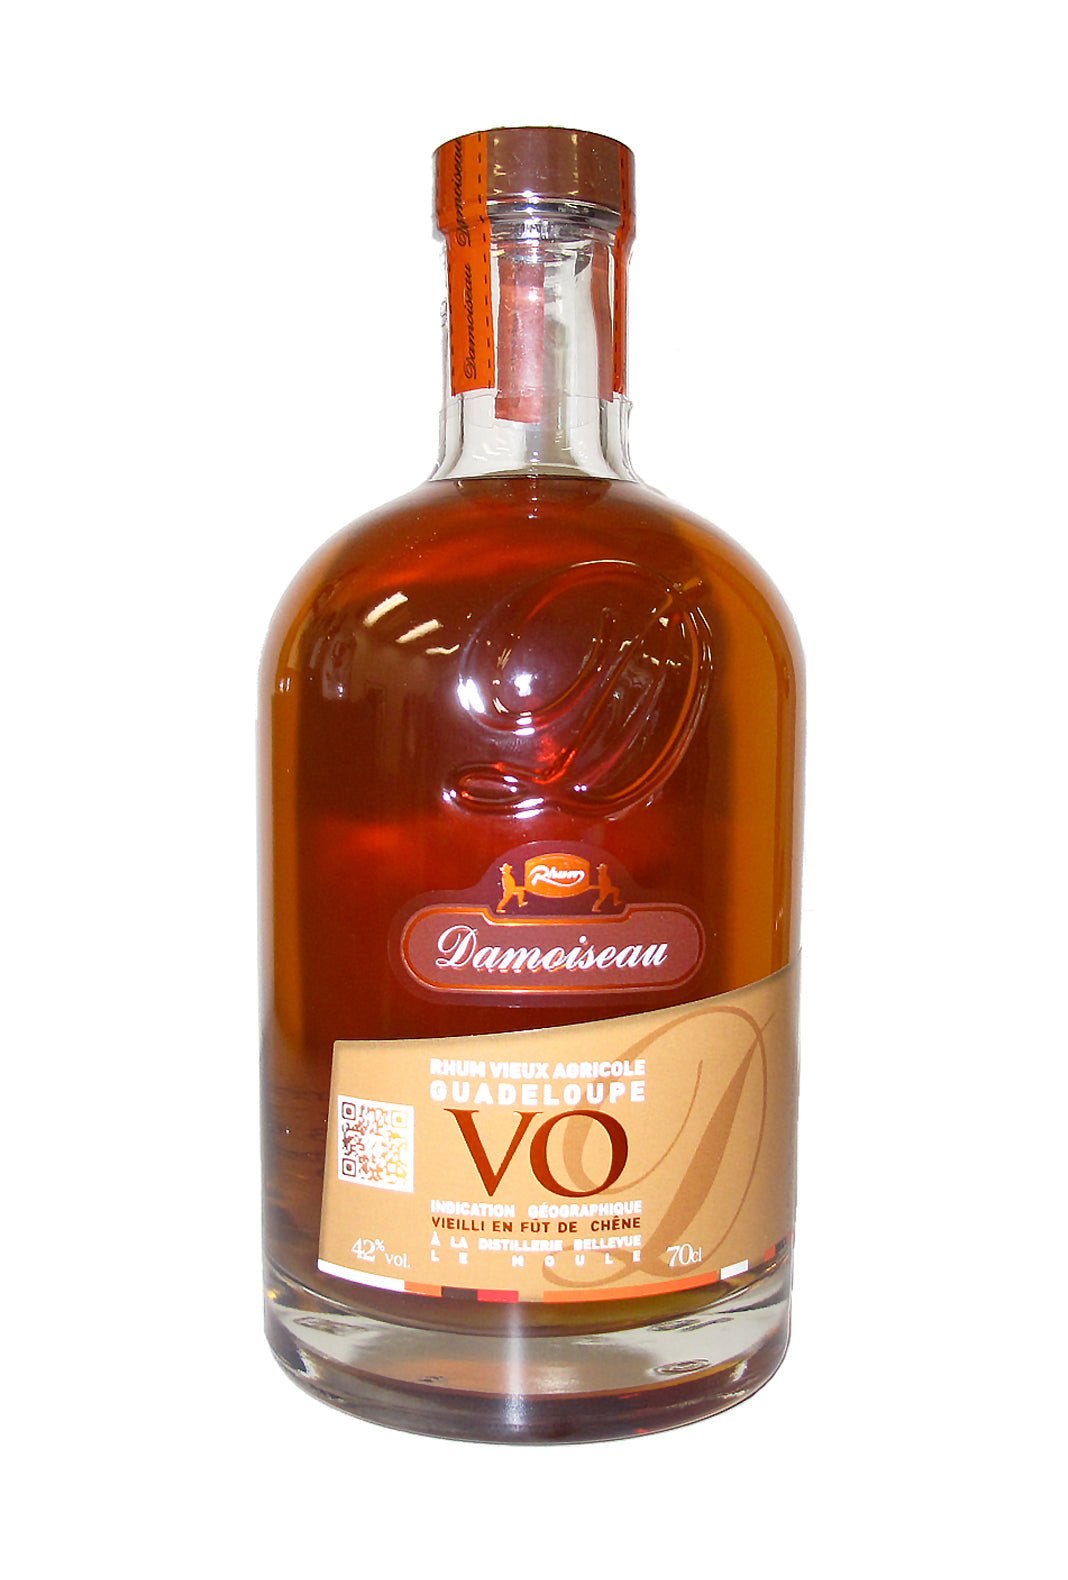 Damoiseau Rum Agricole VO 3yrs (dark) 42% 700ml - Rum > Agricole - Liquor Wine Cave